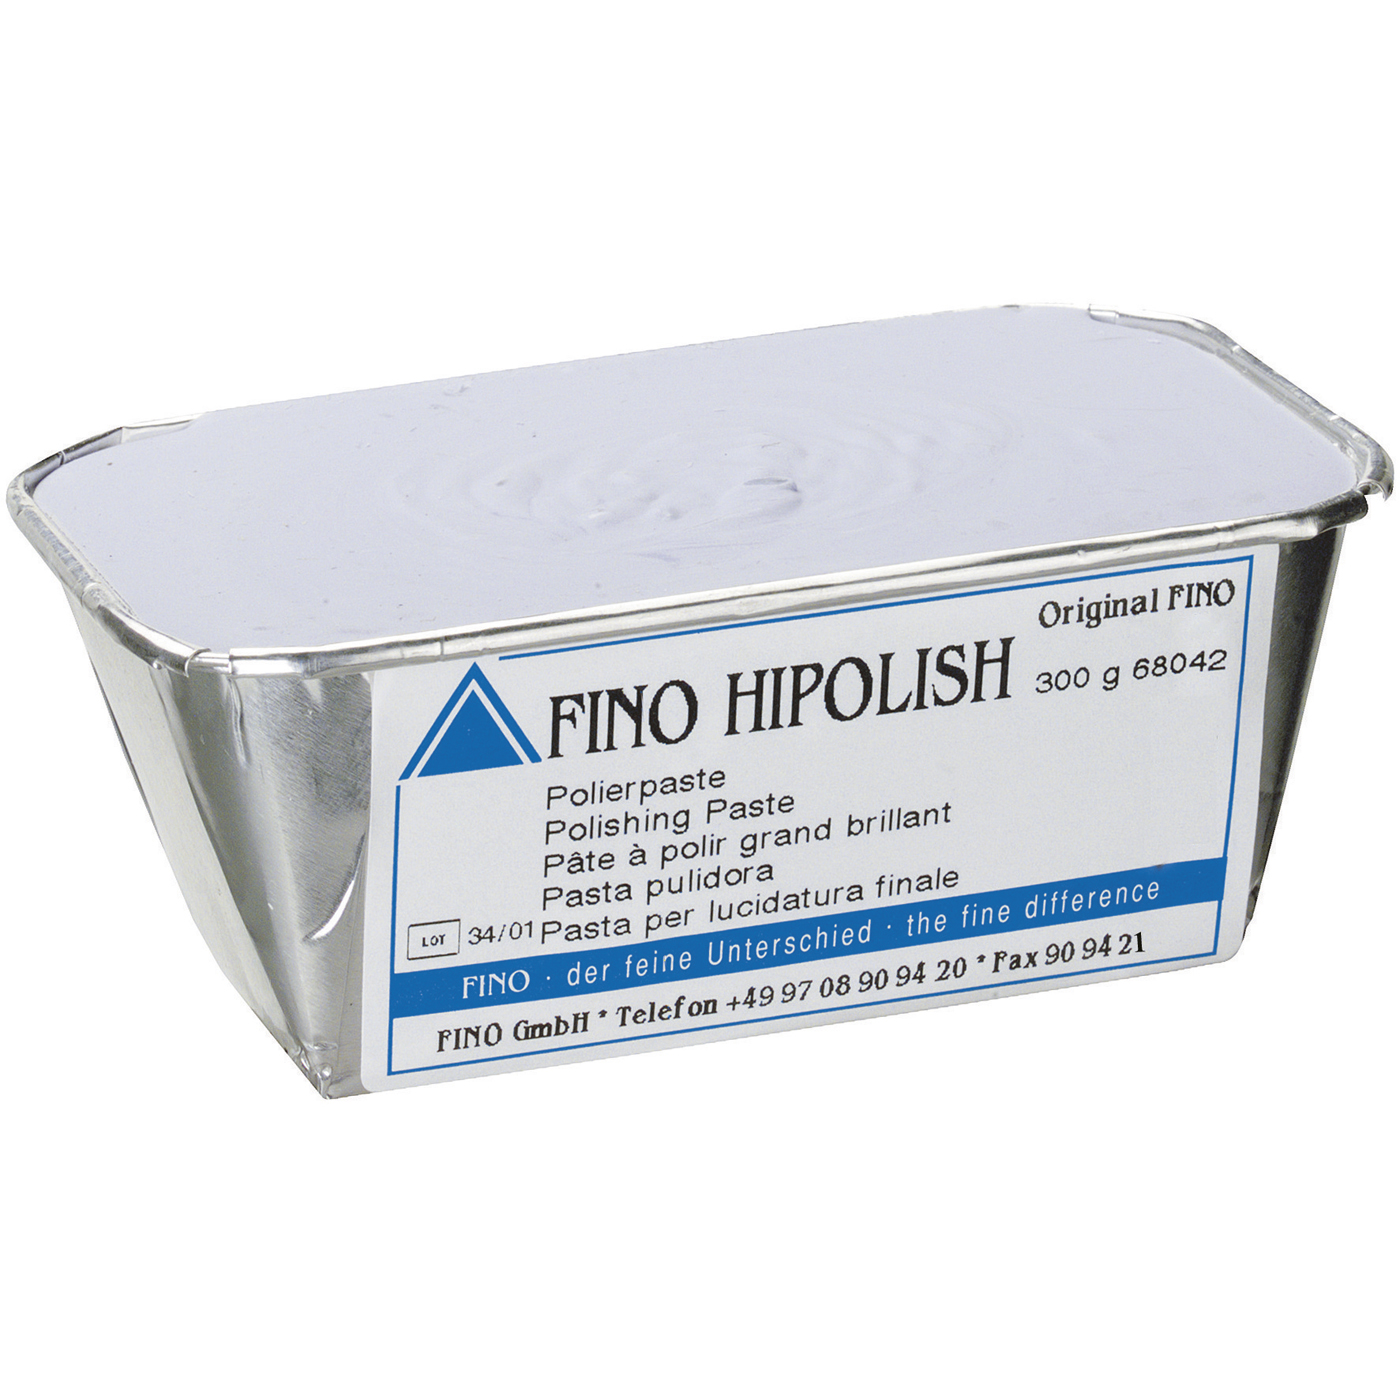 FINO HIPOLISH Polierpaste, hellblau - 300 g